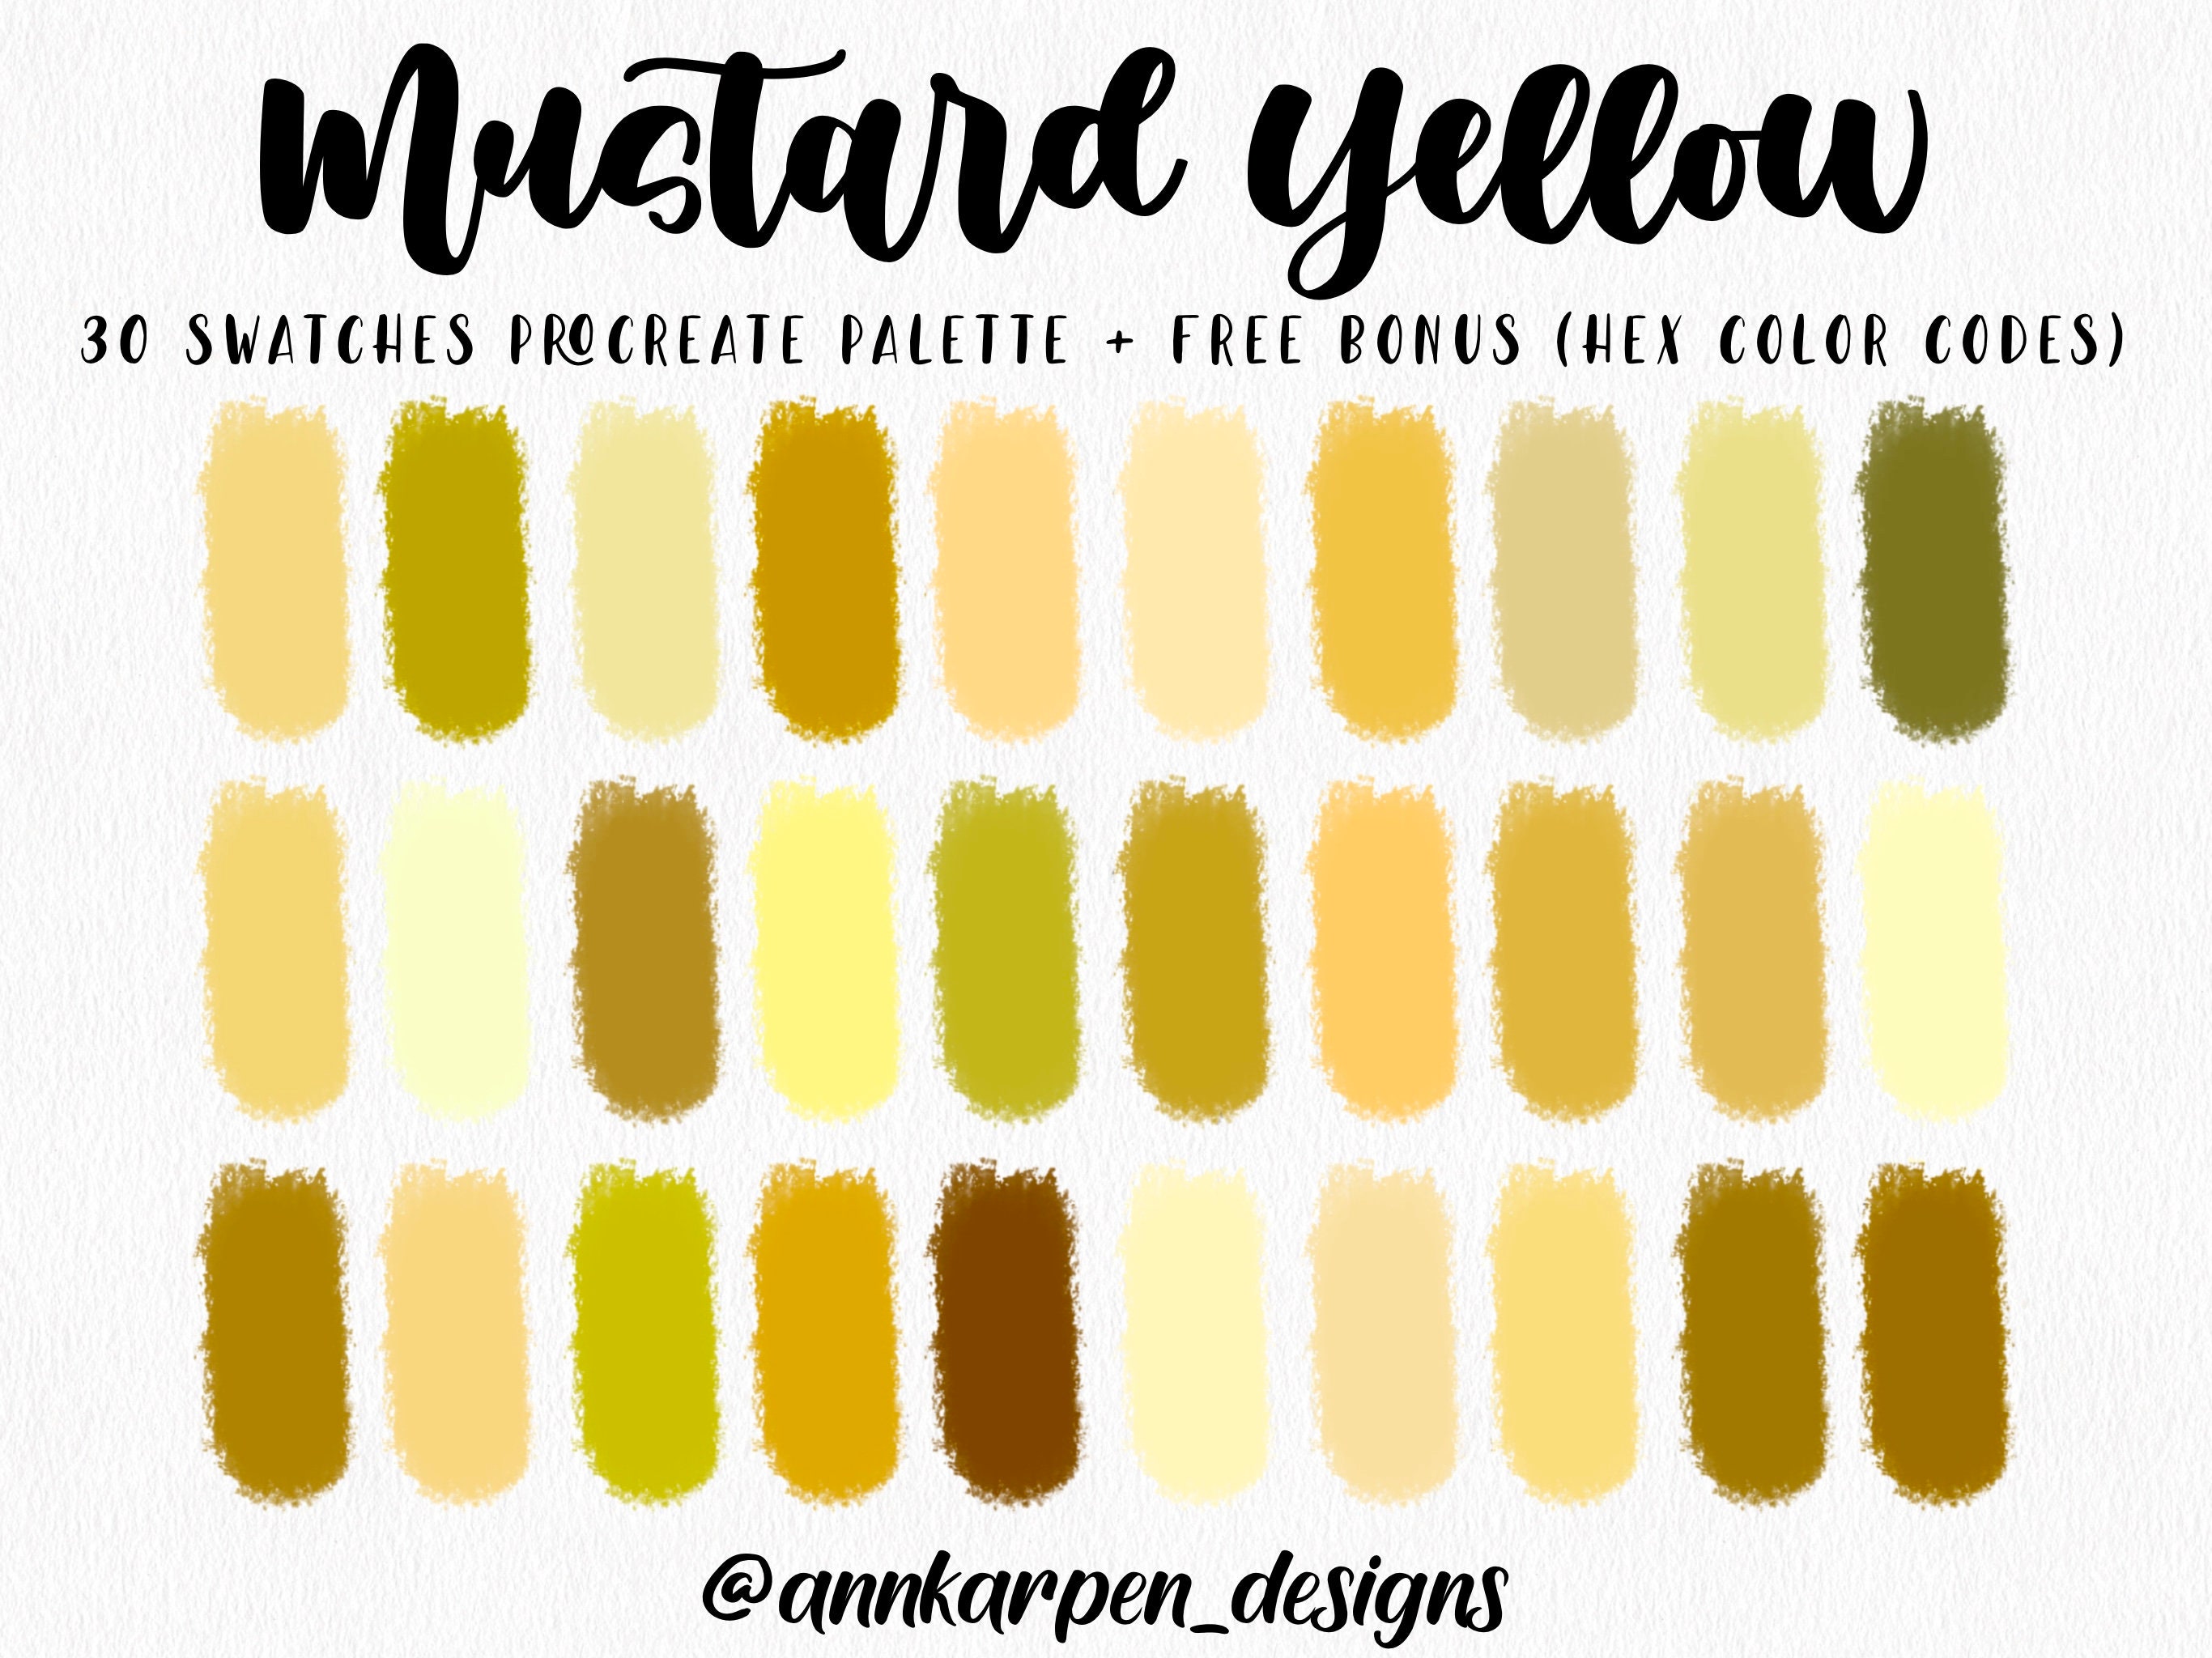 8. "Mustard Yellow" - wide 10